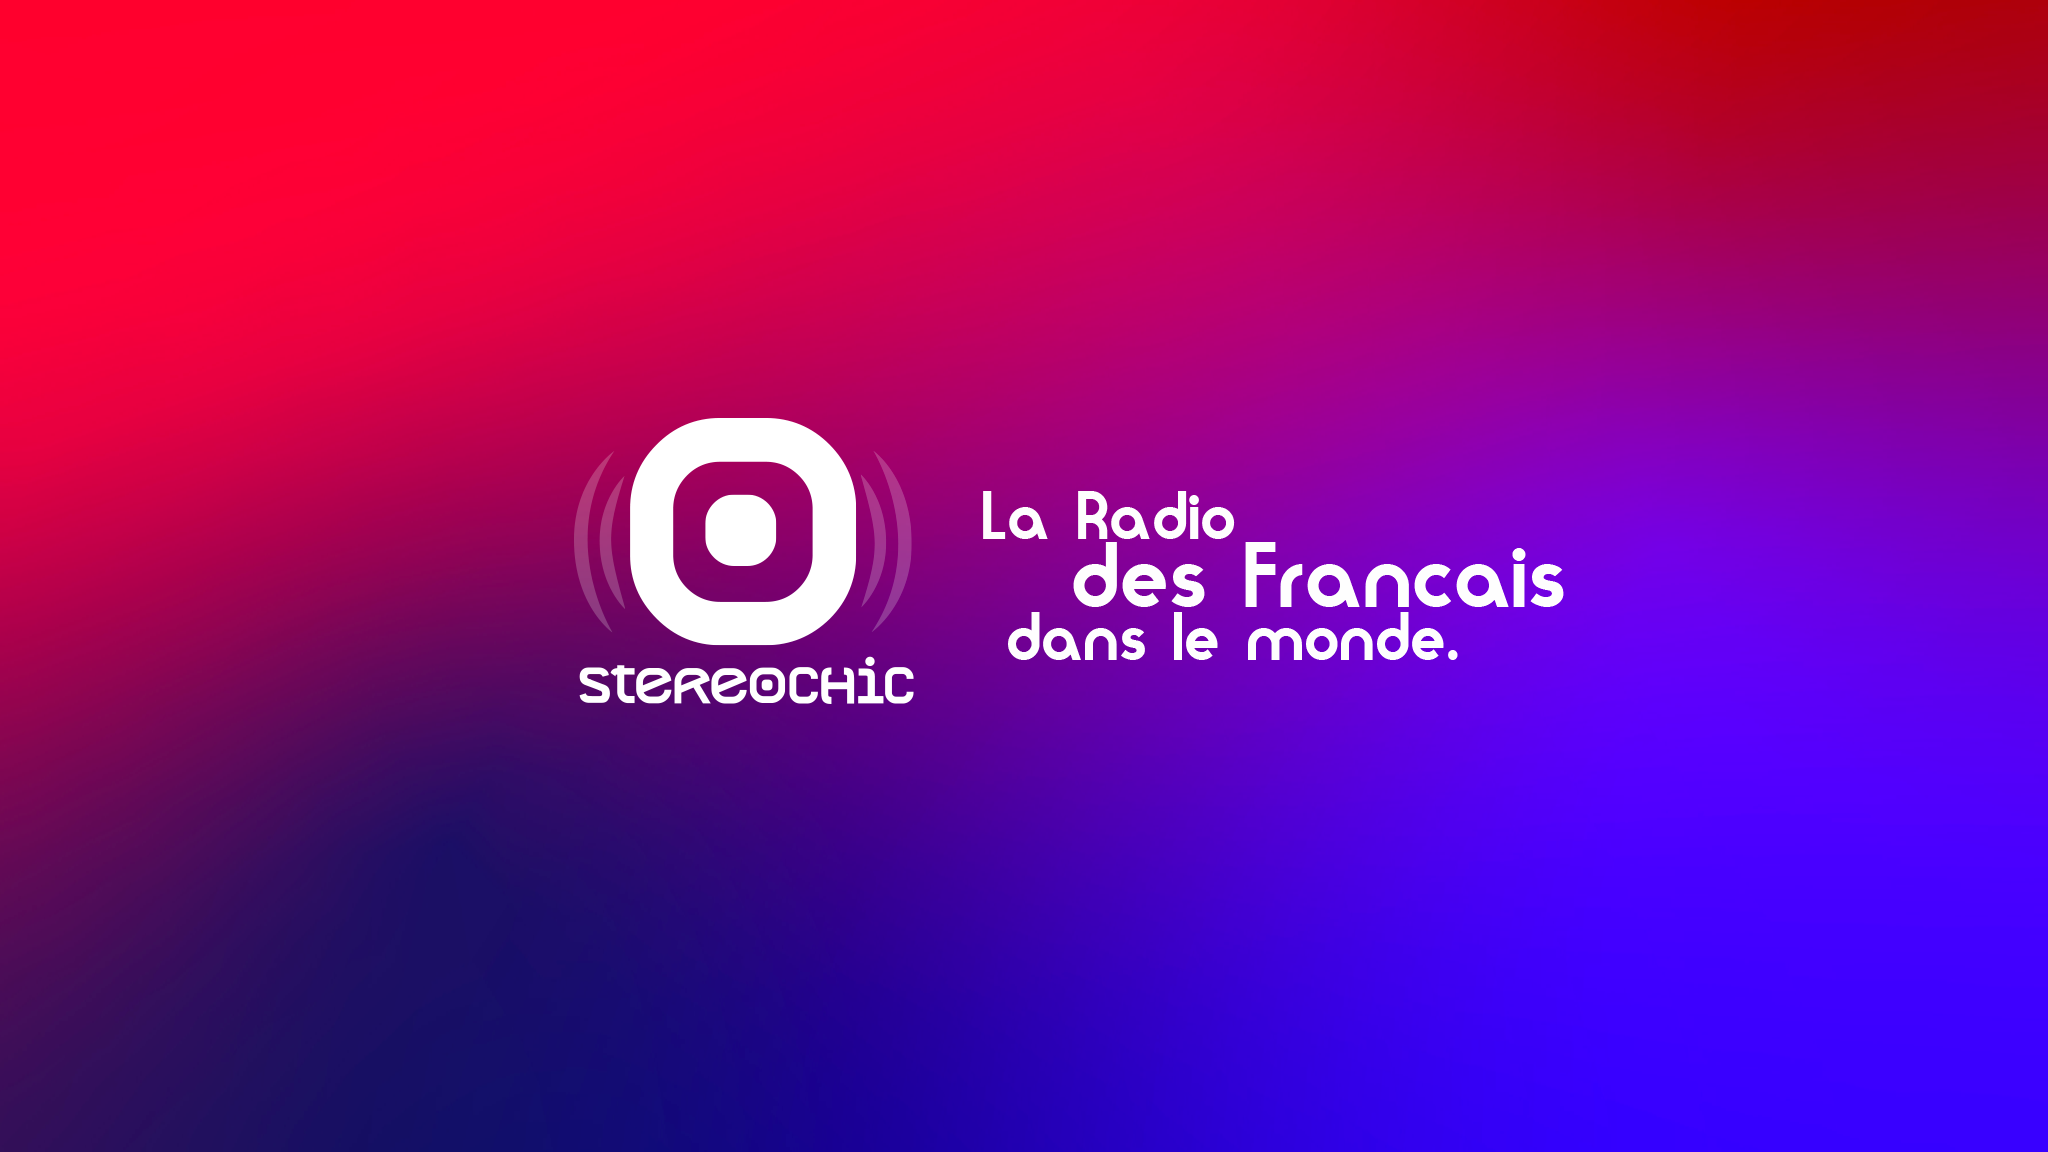 stereochic-logo slogan.png (446 KB)